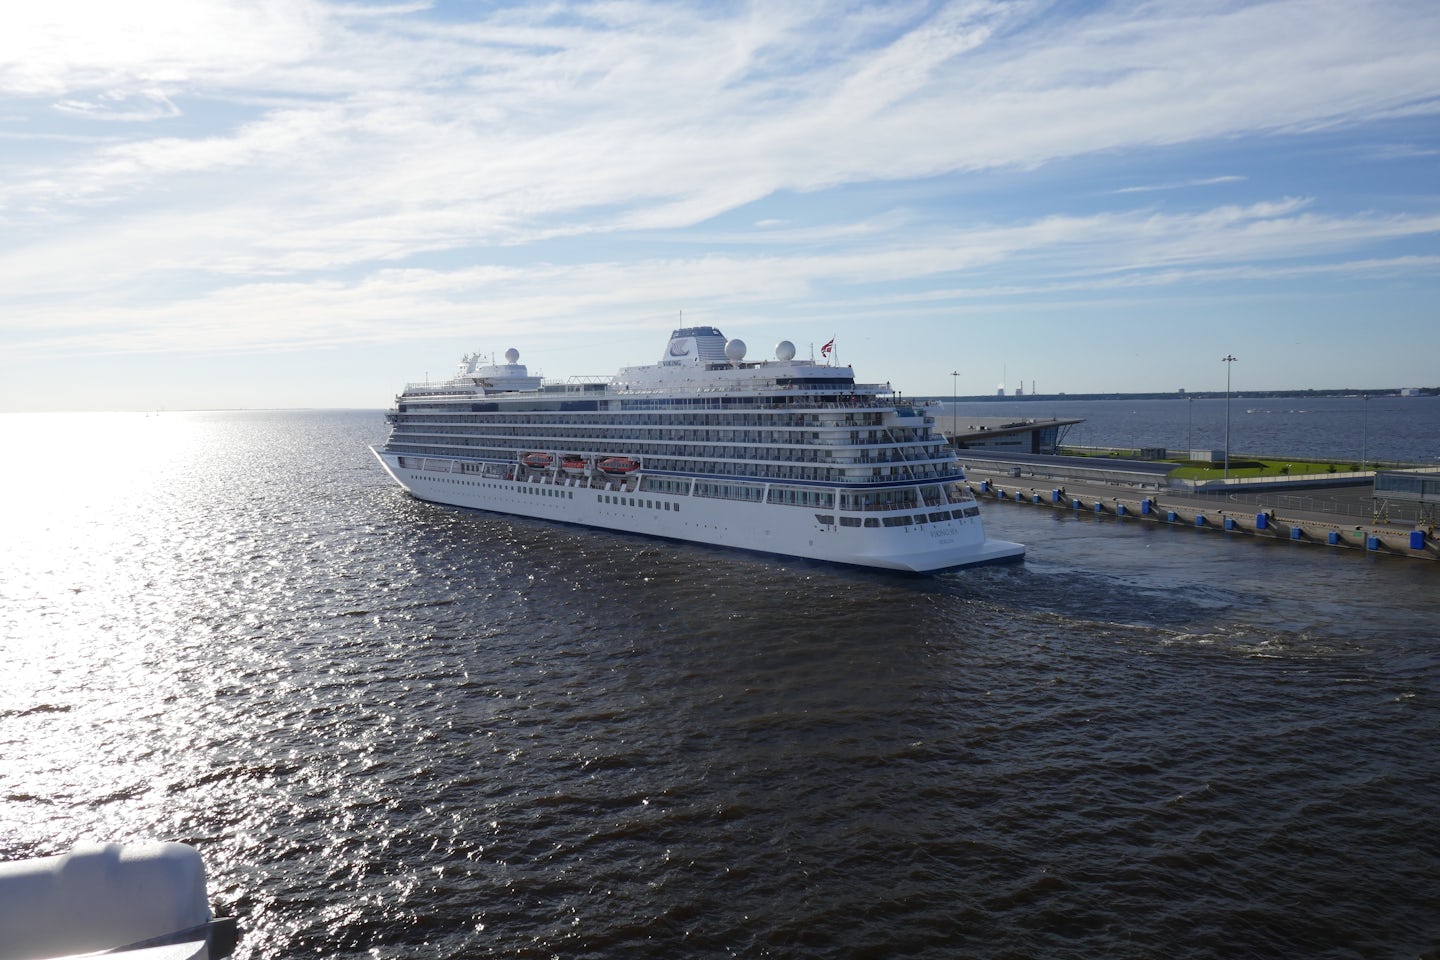 Viking's sister ship departing from St. Petersburg